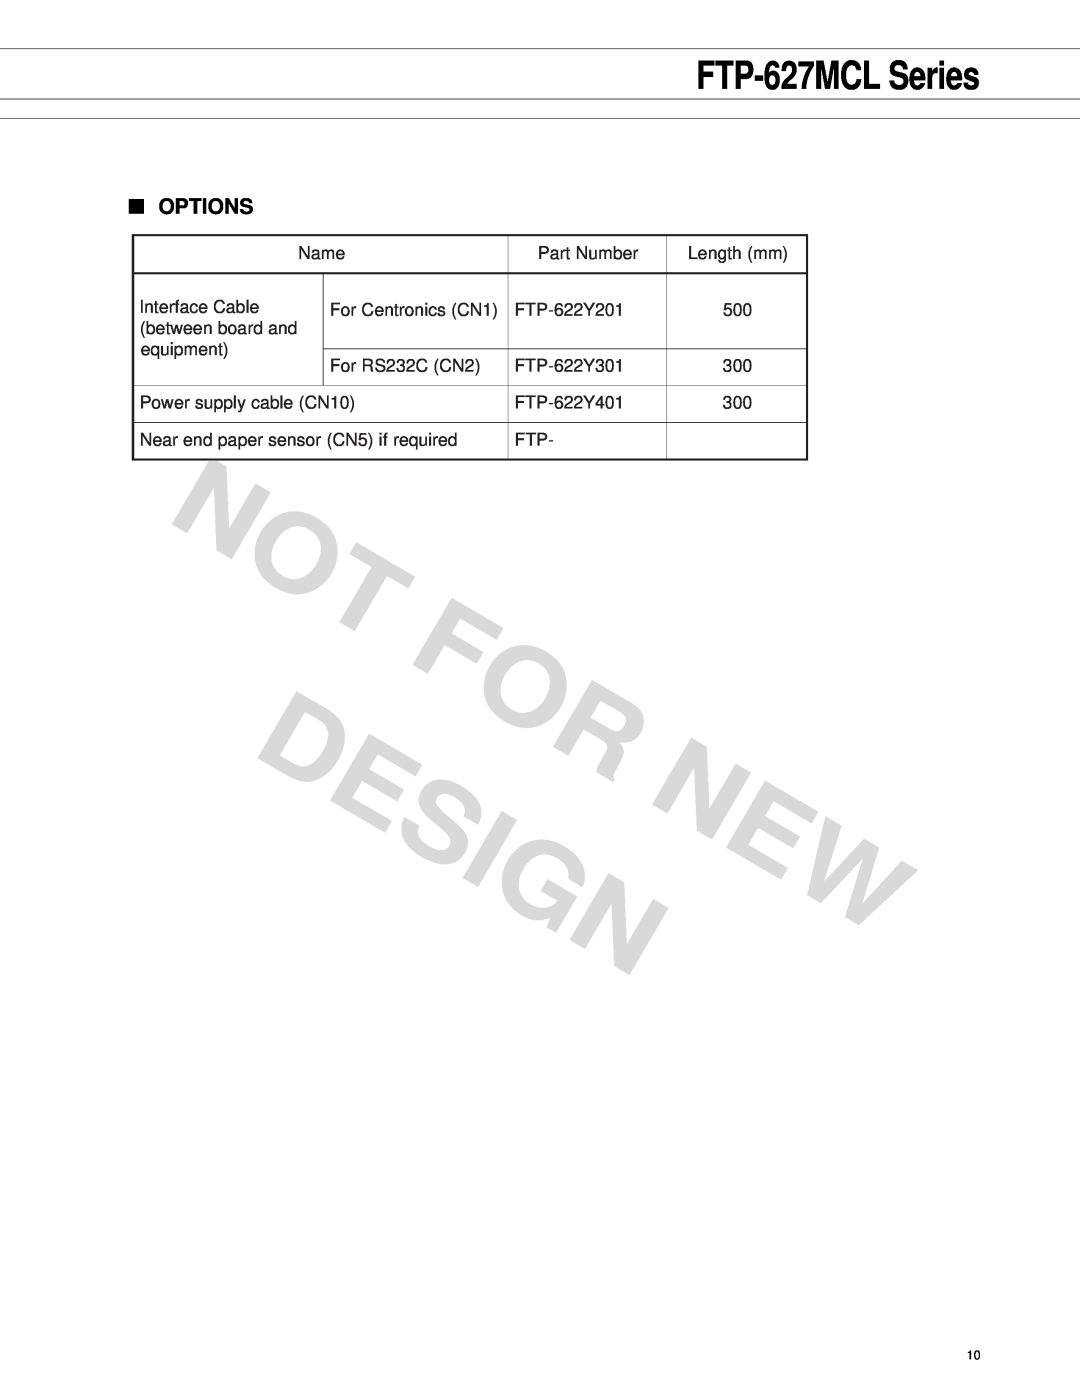 Fujitsu FTP-627 Series manual Designnew, Options, FTP-627MCL Series 